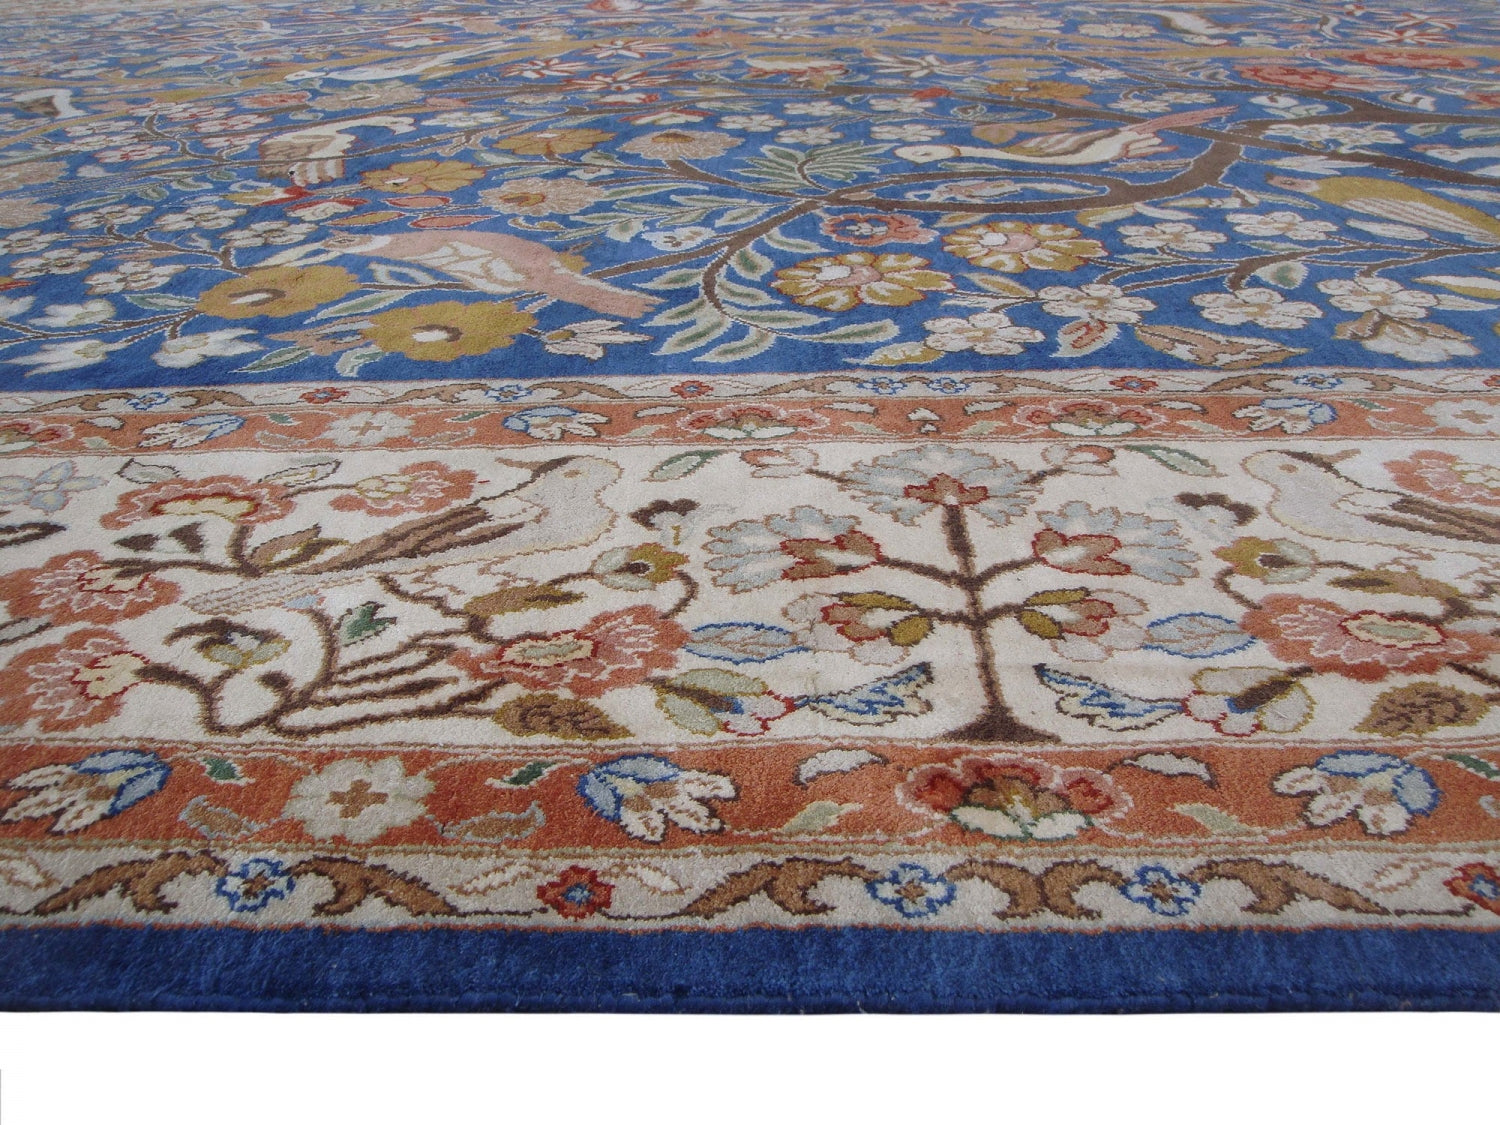 Tehran Garden of Paradise design silk pile carpet